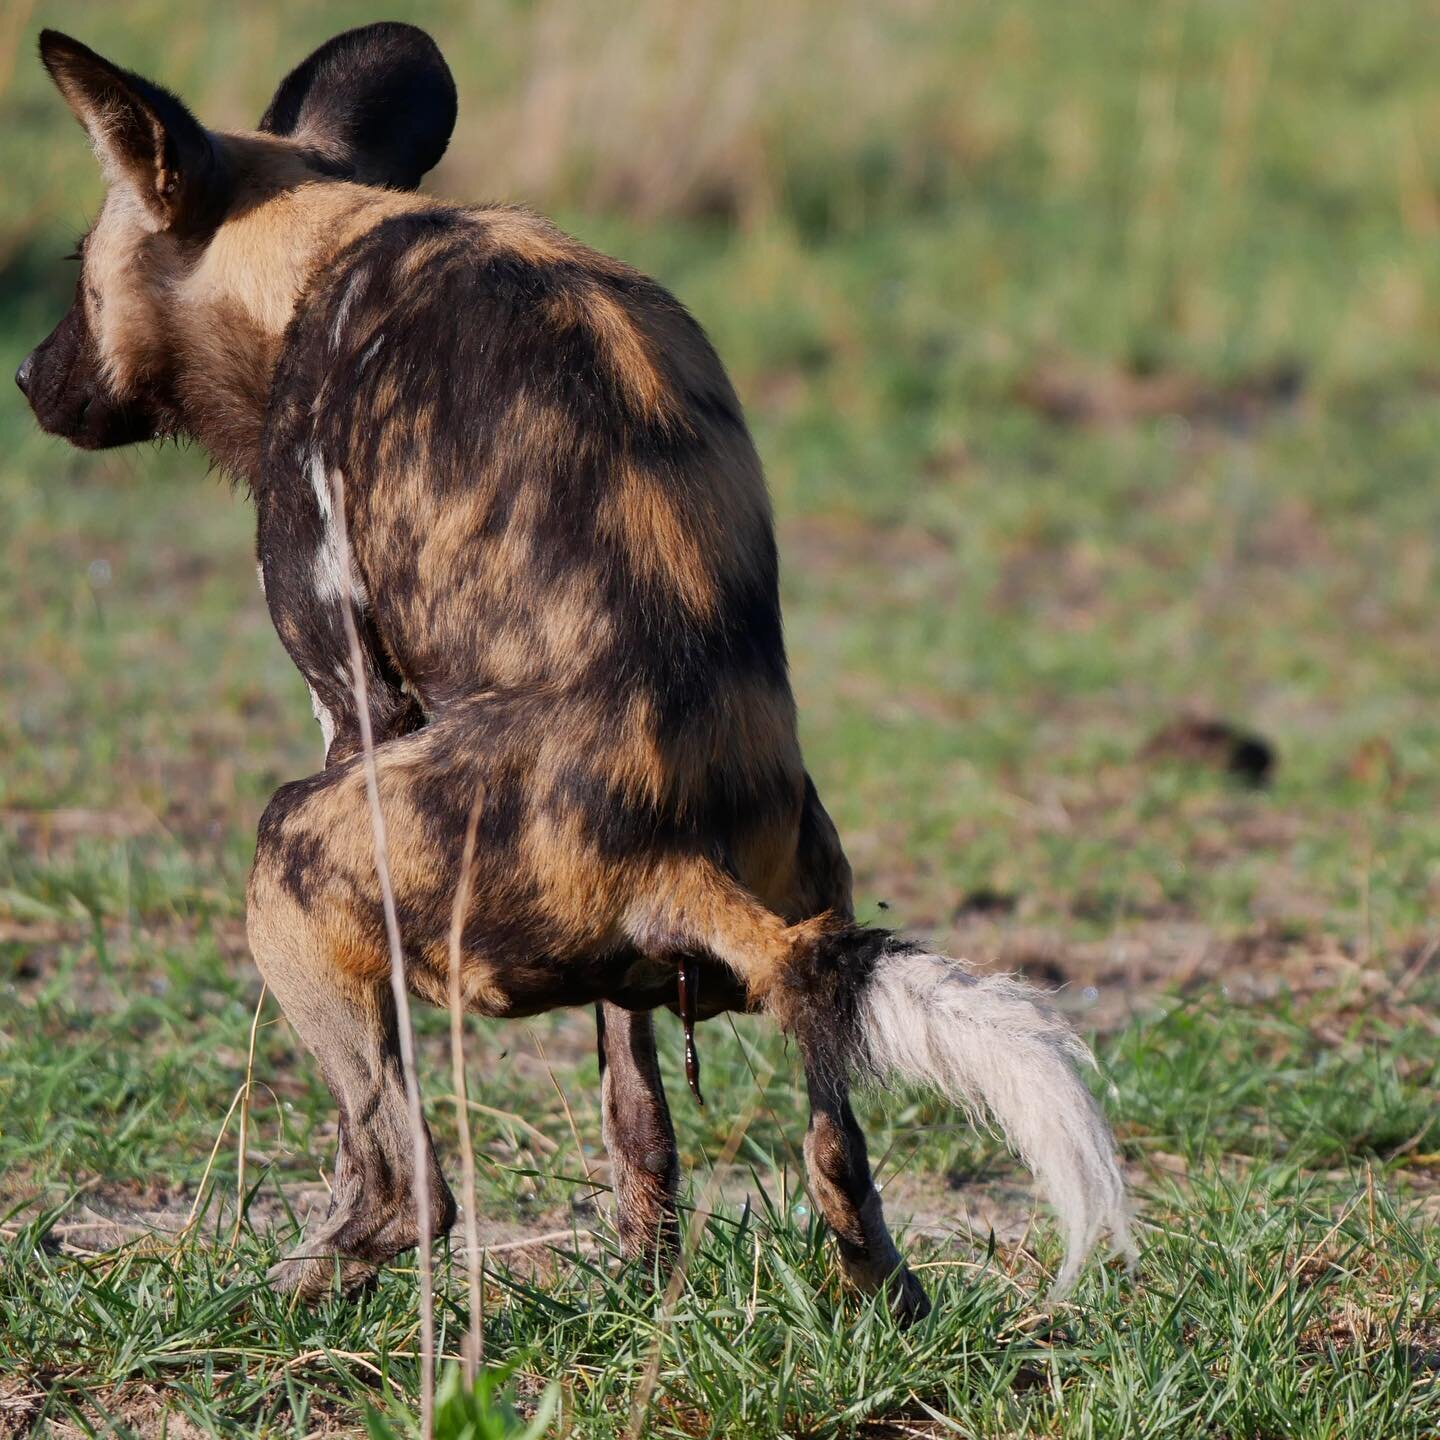 Wild dog - Botswana
#safari #safariphotography #luxurysafari #botswana #okavango #okavangodelta #funny #fun #funnydogs #animalcrossingnewhorizons #animalcrossing #animal #animals #wildanimals #wild #wildlife #wildlifephotography #wildlifeonearth #wil